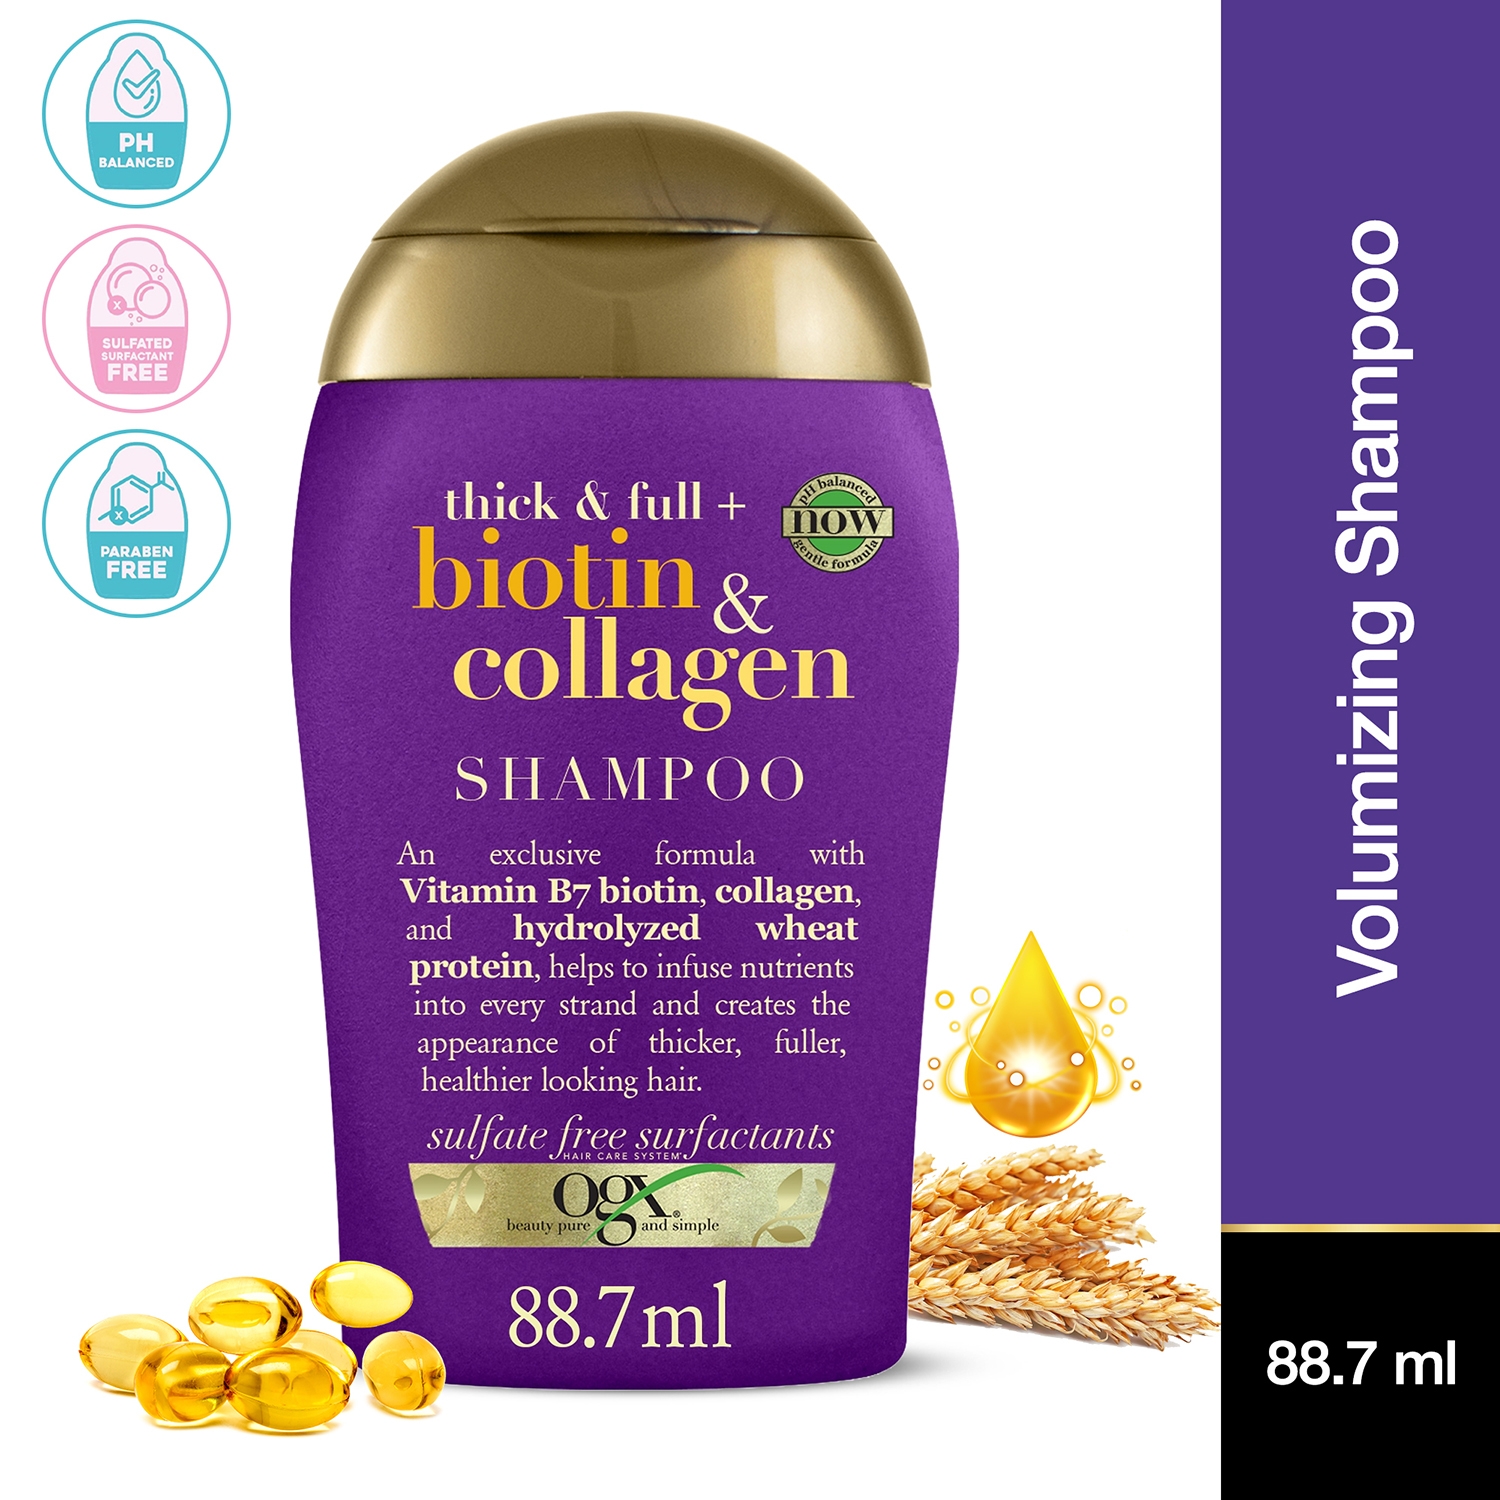 OGX | OGX Thick & Full Biotin & Collagen Shampoo (88.7ml)